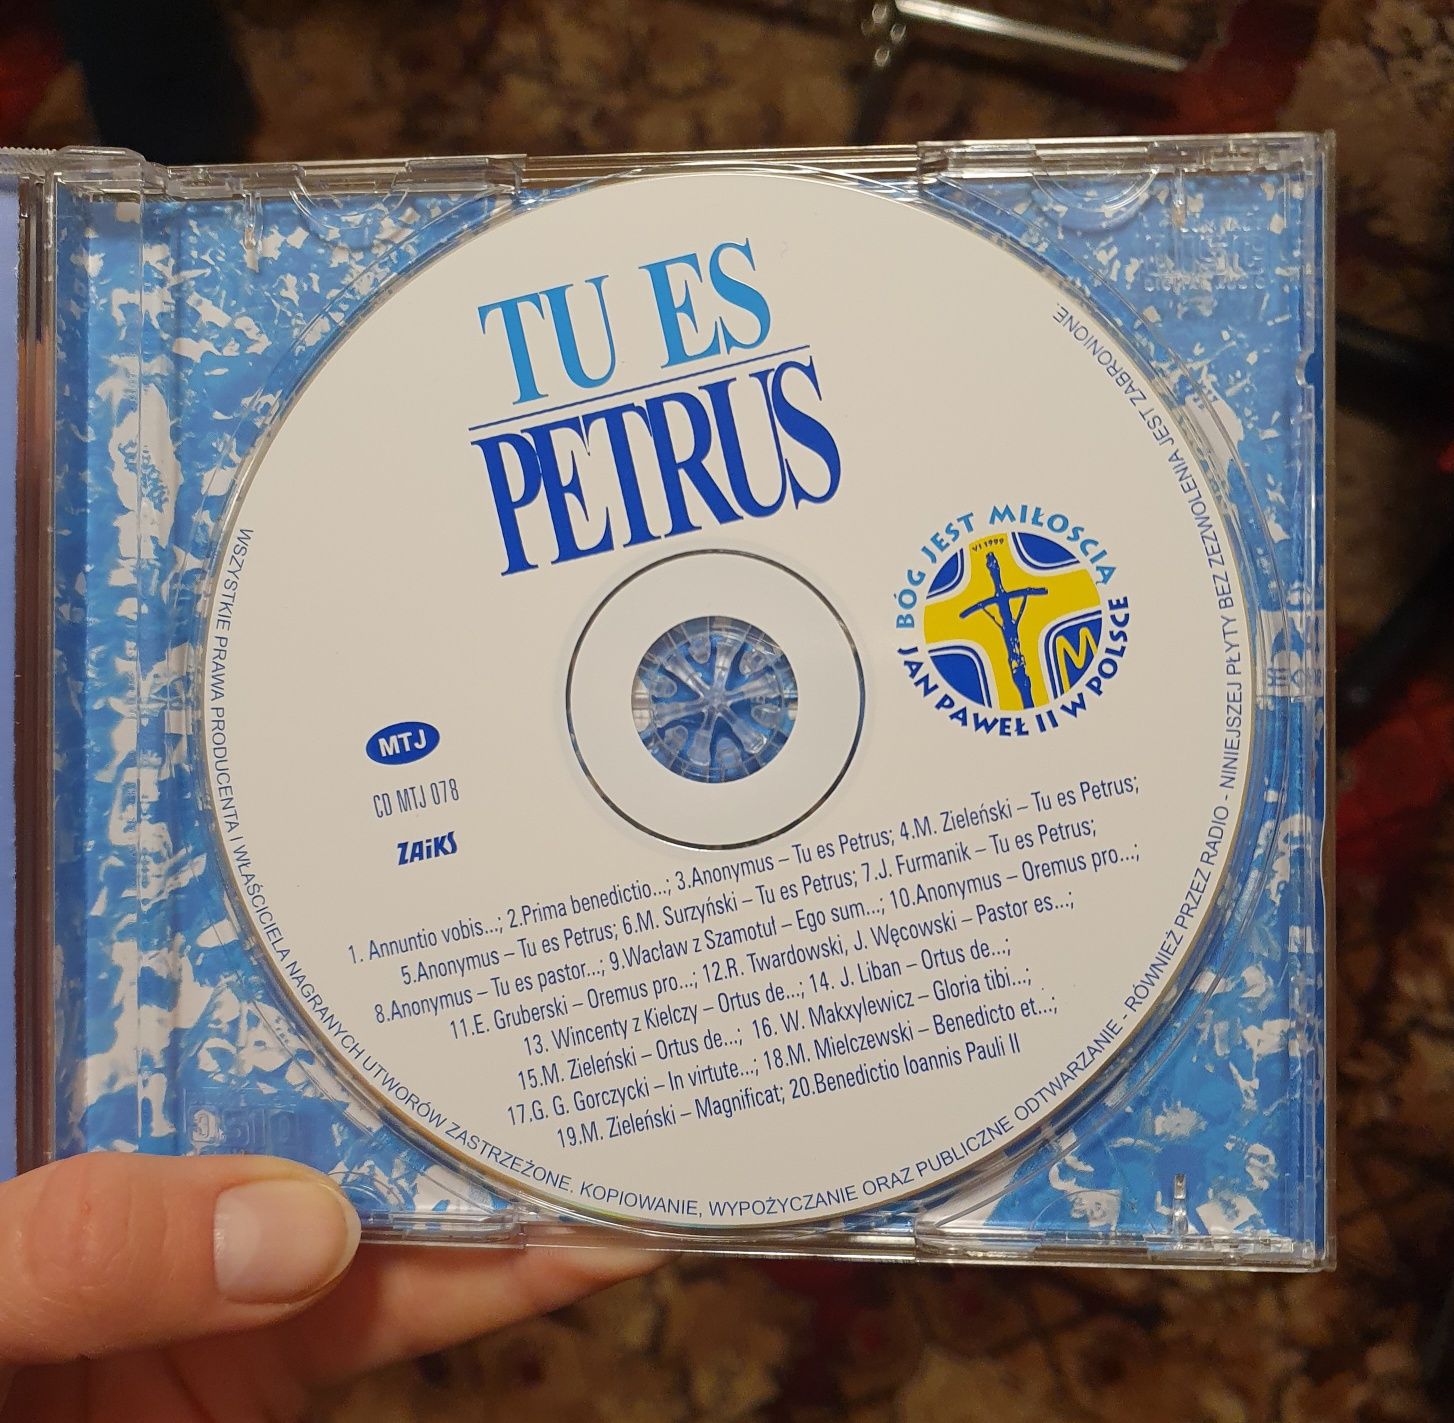 Płyta CD "Tu es petrus" Jan Paweł II